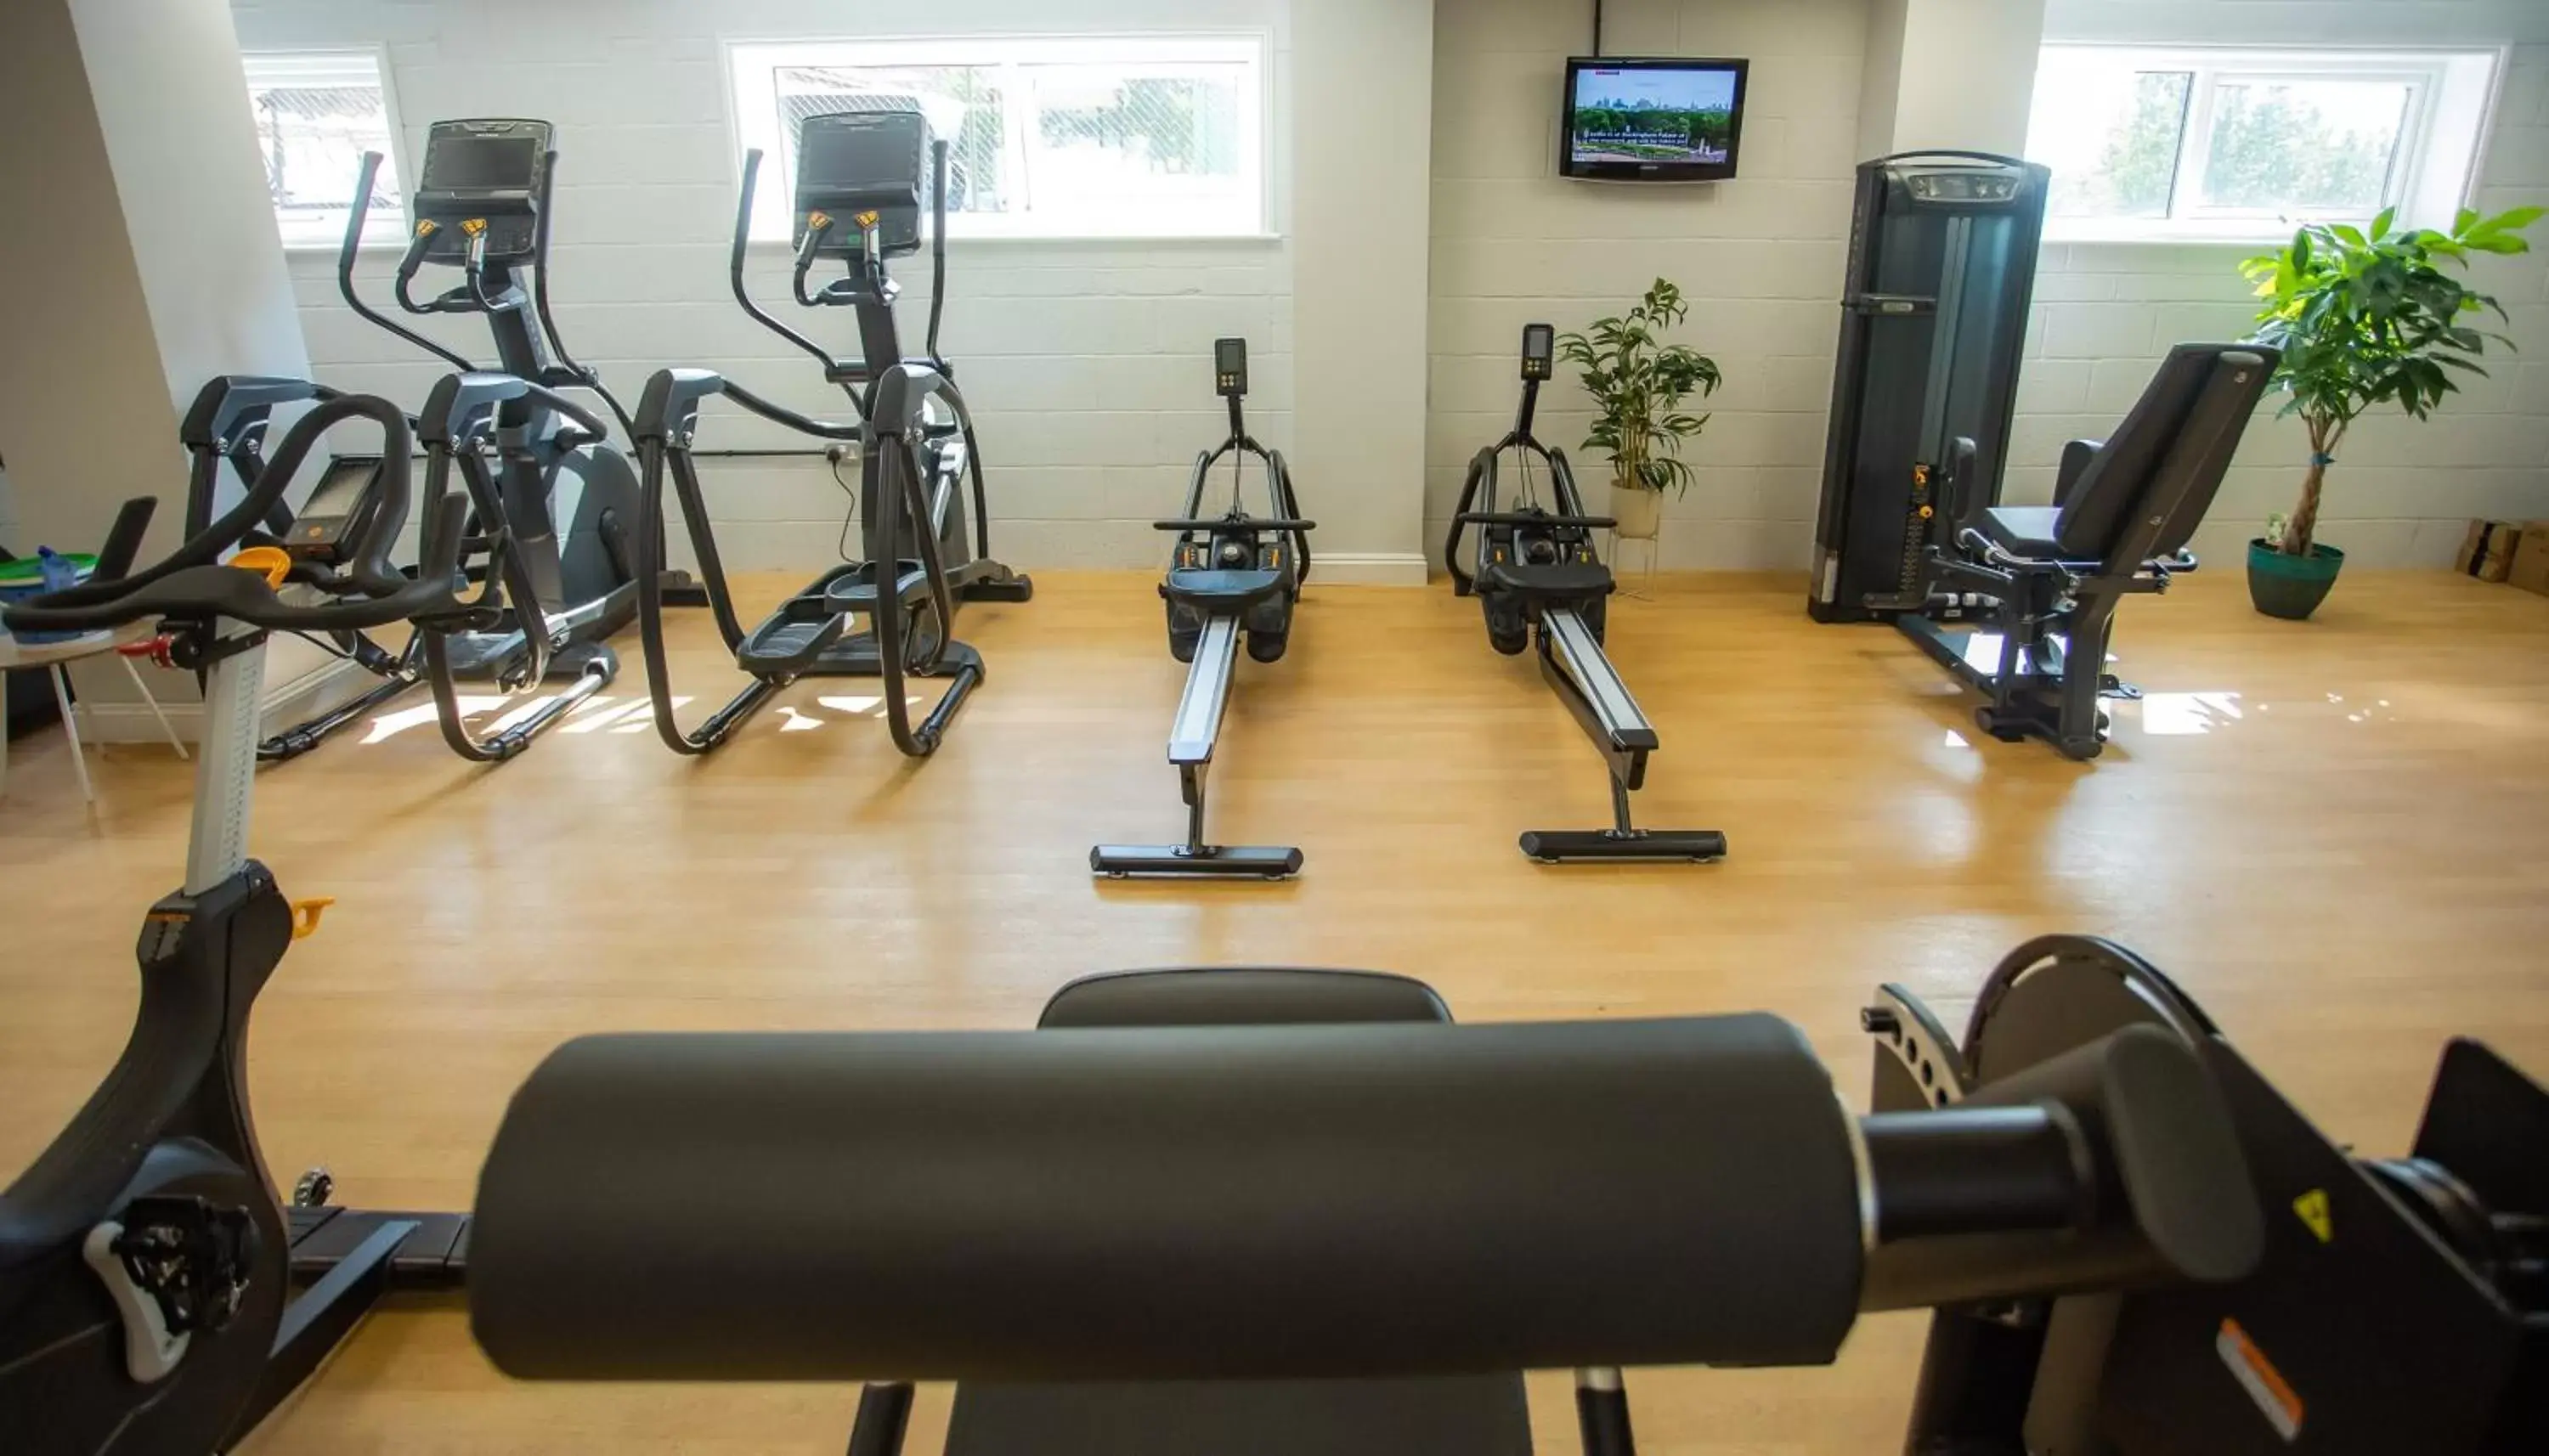 Fitness centre/facilities, Fitness Center/Facilities in Bells Hotel